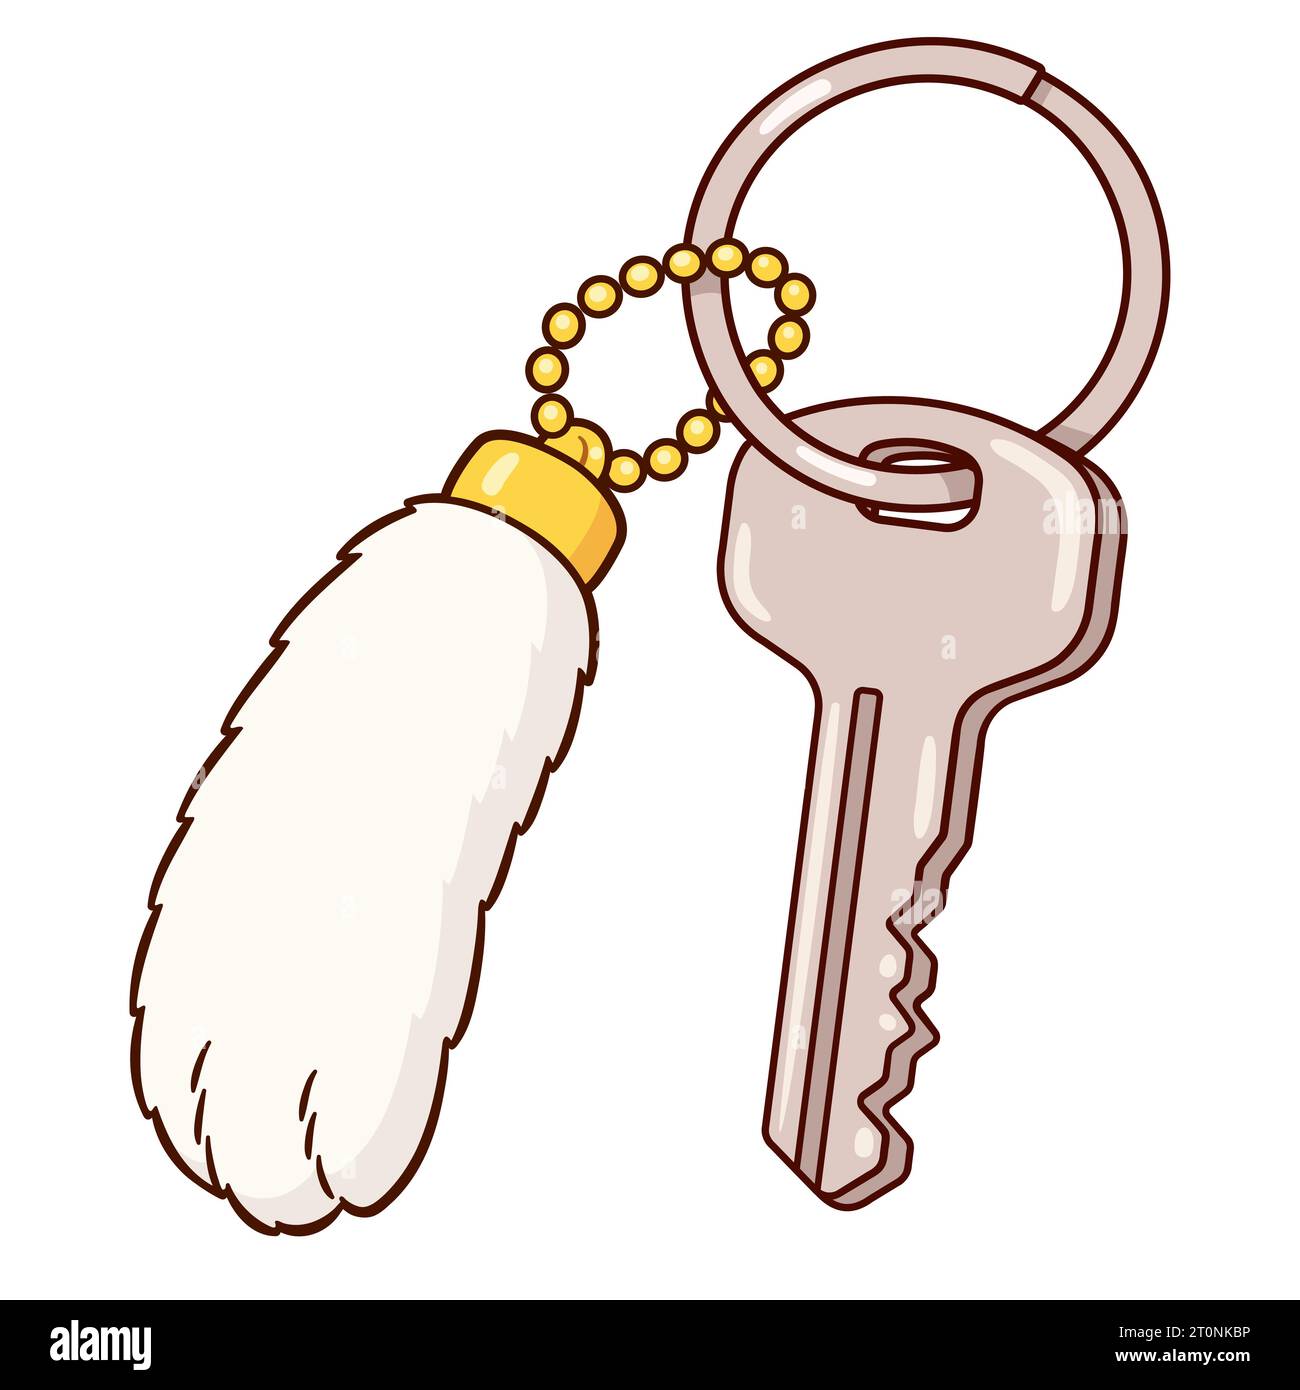 Glücklicher Kaninchenfuß am Schlüsselanhänger und Schlüsselanhänger mit Hausschlüssel. Zeichentrickzeichnung, isolierte Vektor-Clip-Kunst-Illustration. Stock Vektor